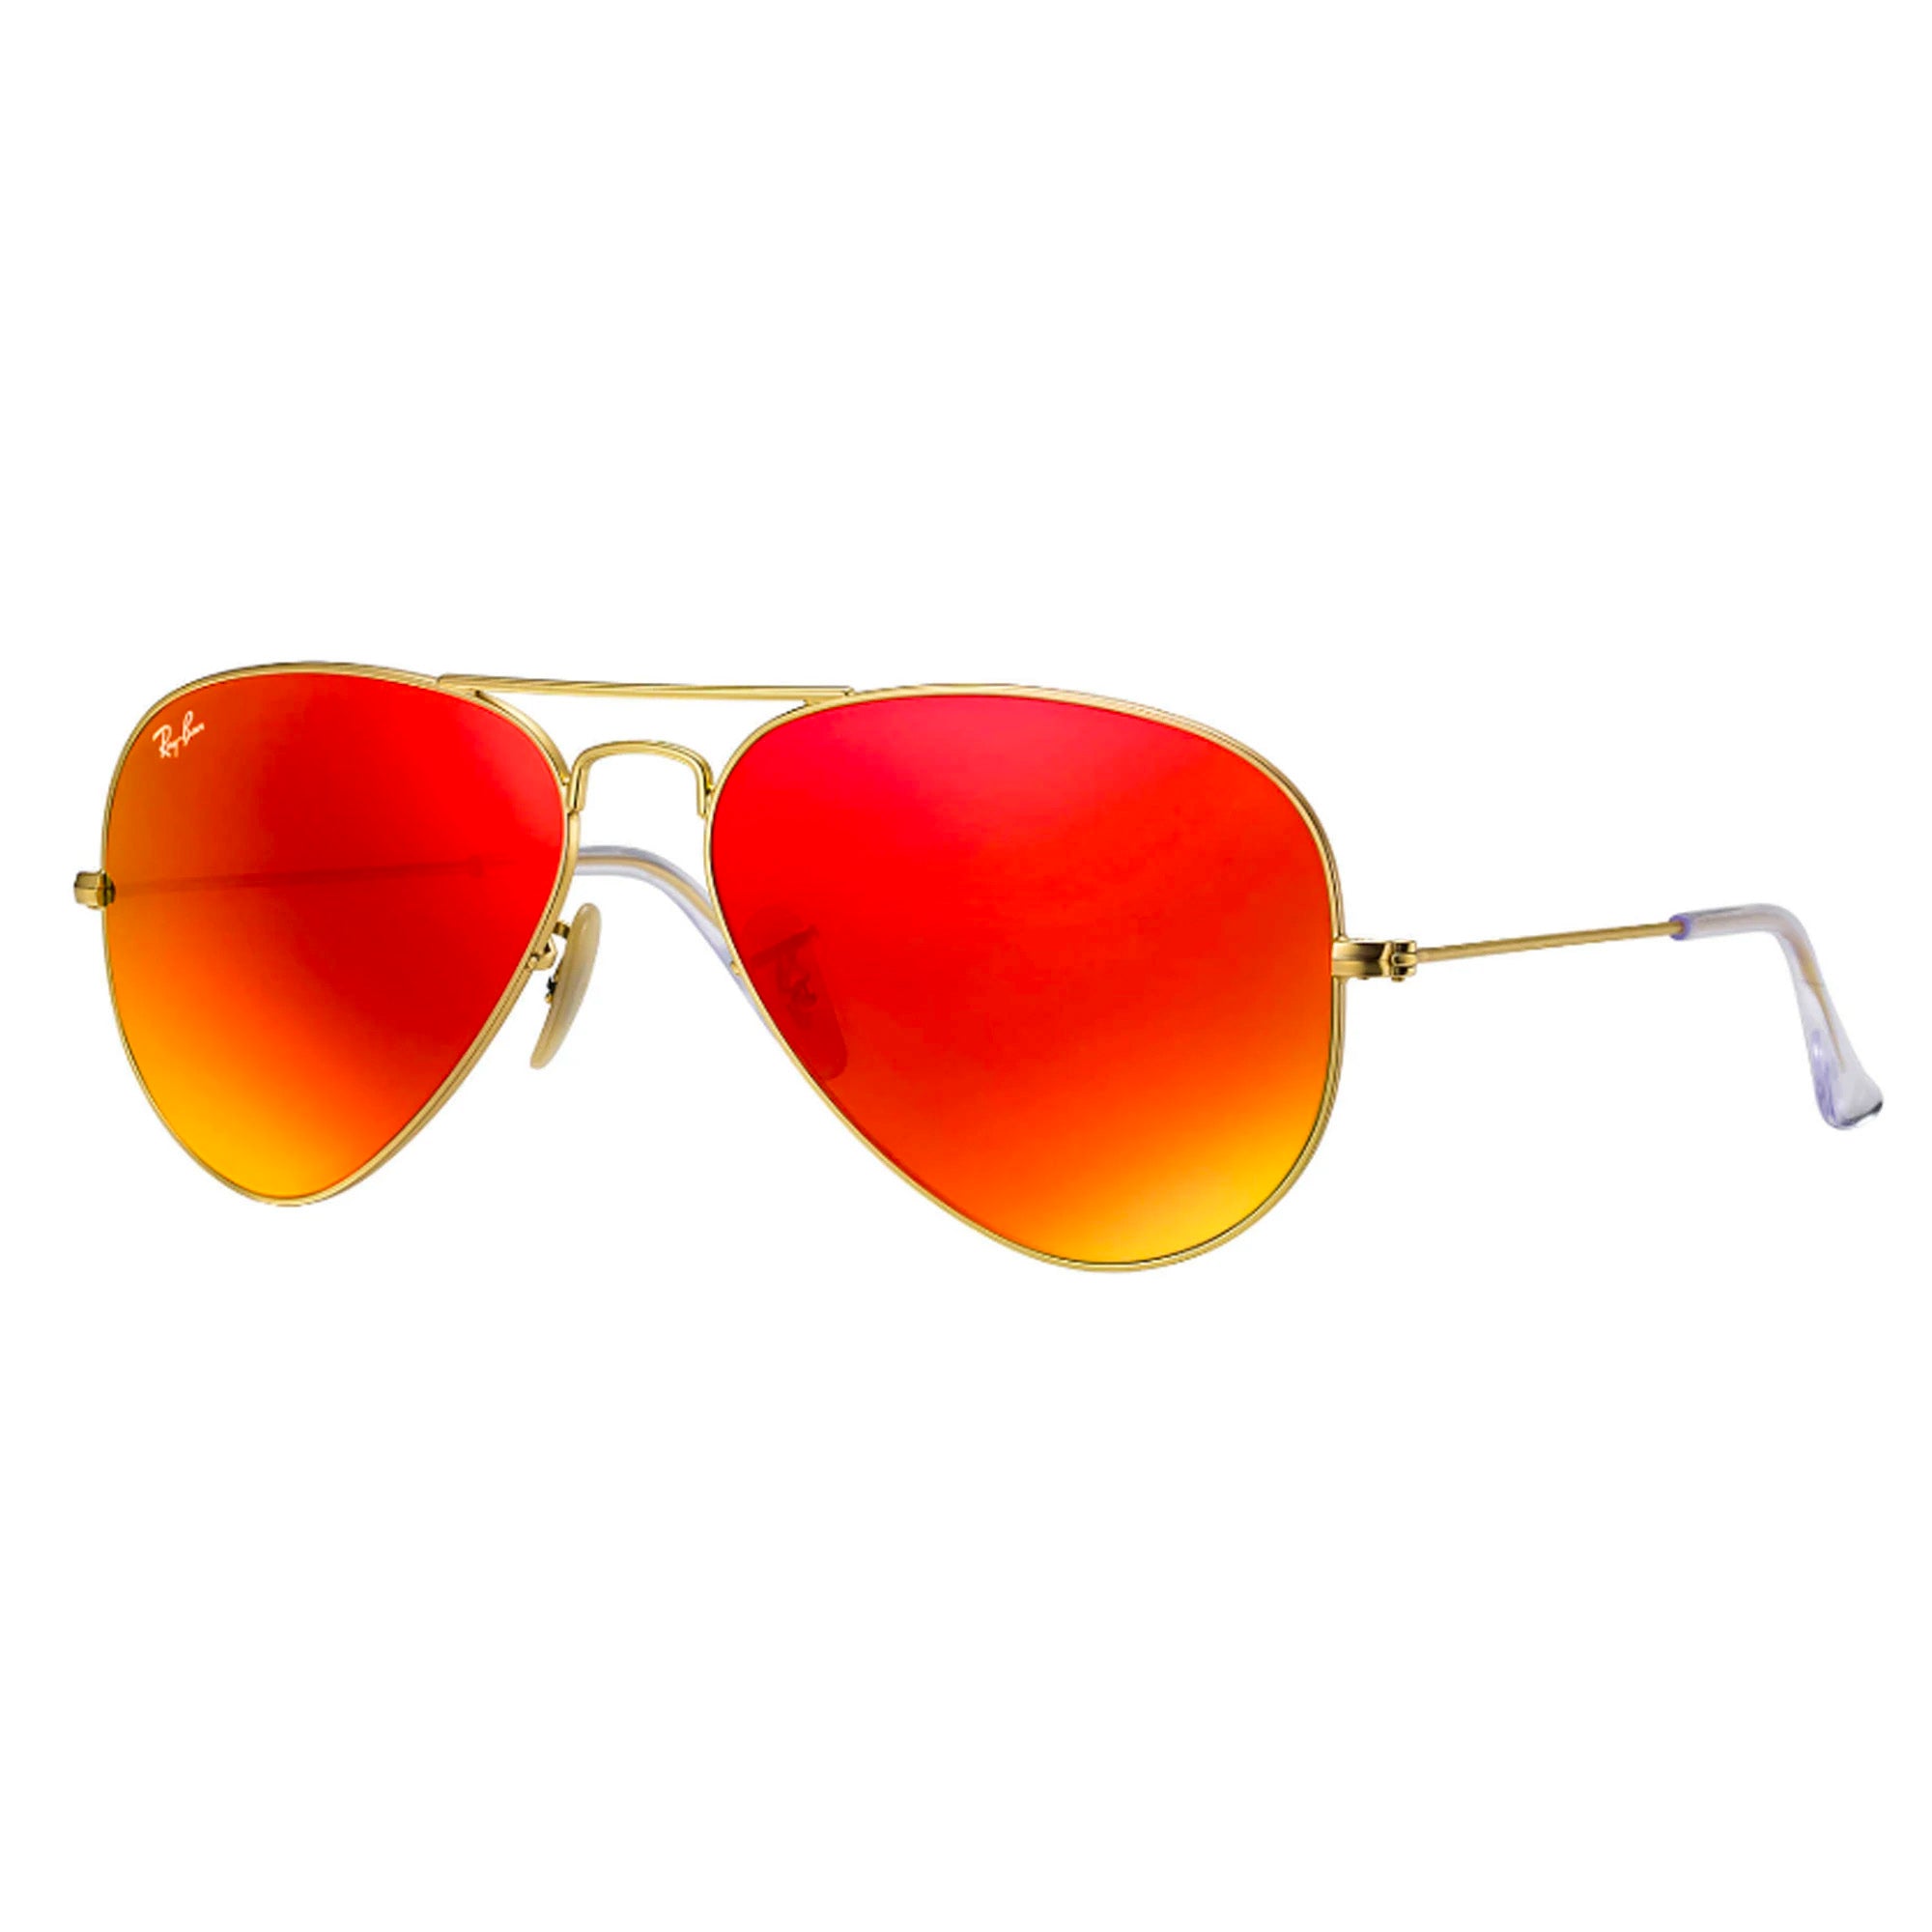 Ray-Ban Aviator Large Women's Sunglasses